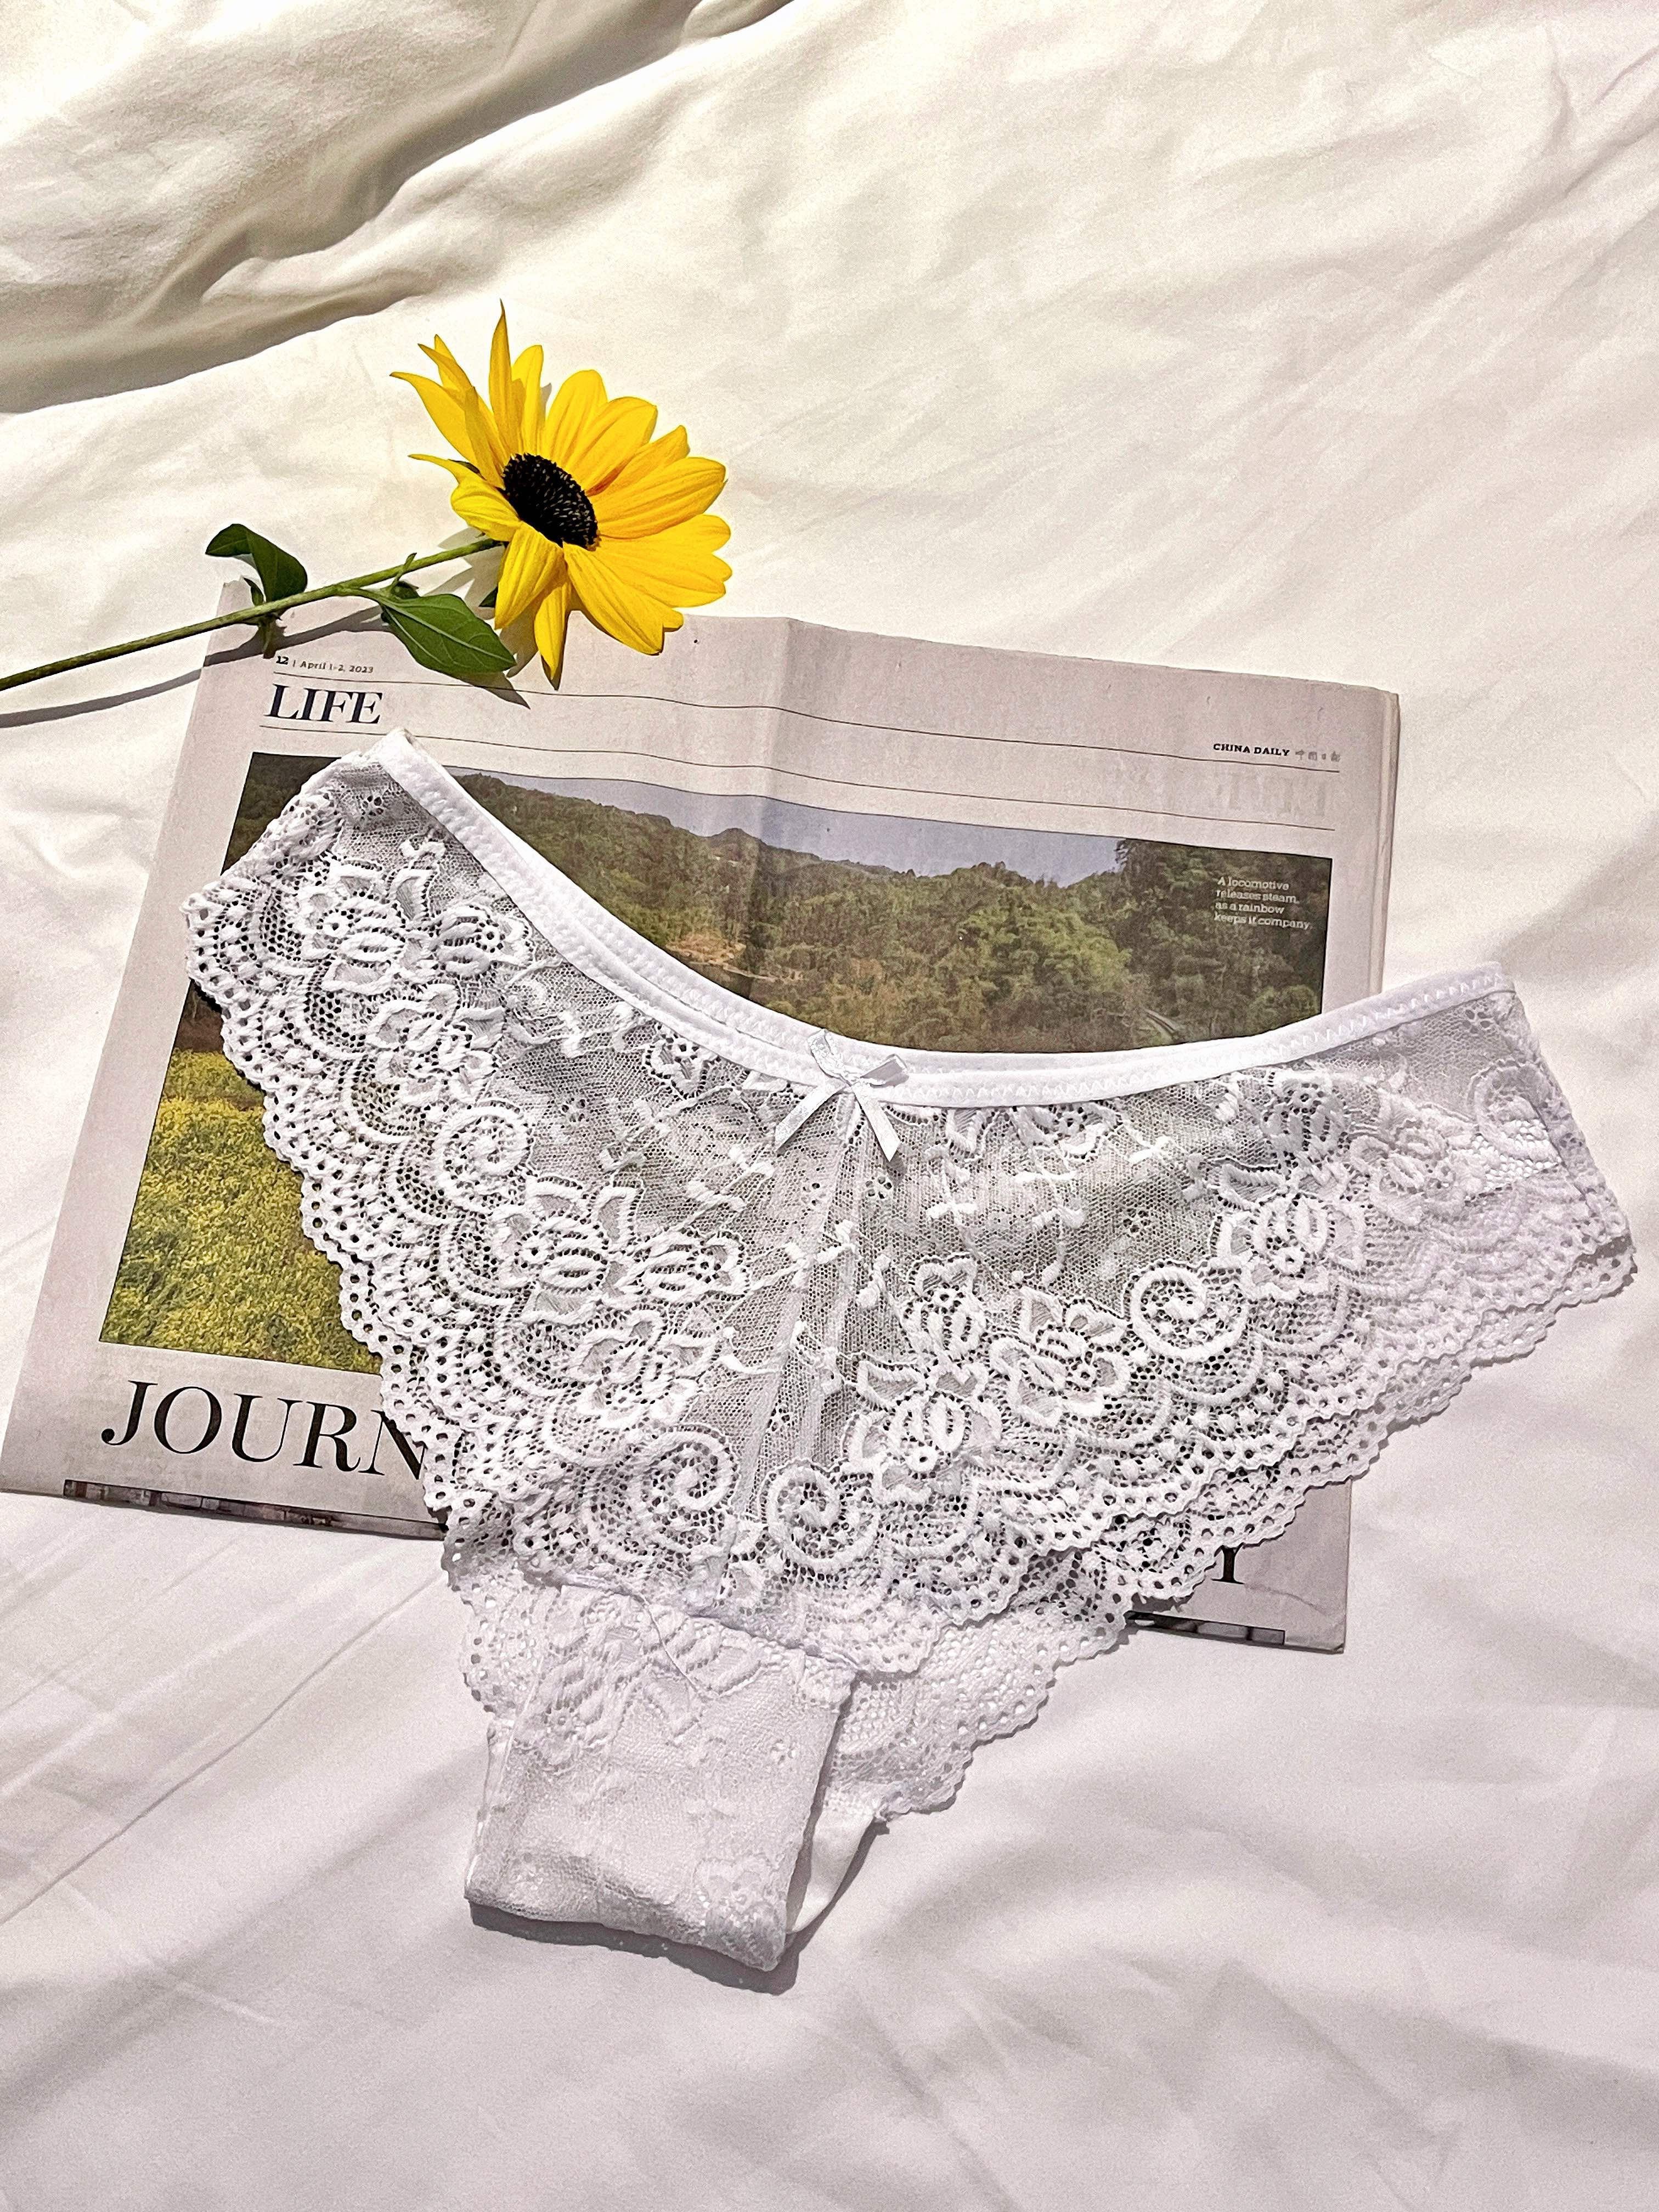 Women's Floral Nylon Spandex Underwear Panties Lingerie Bow at